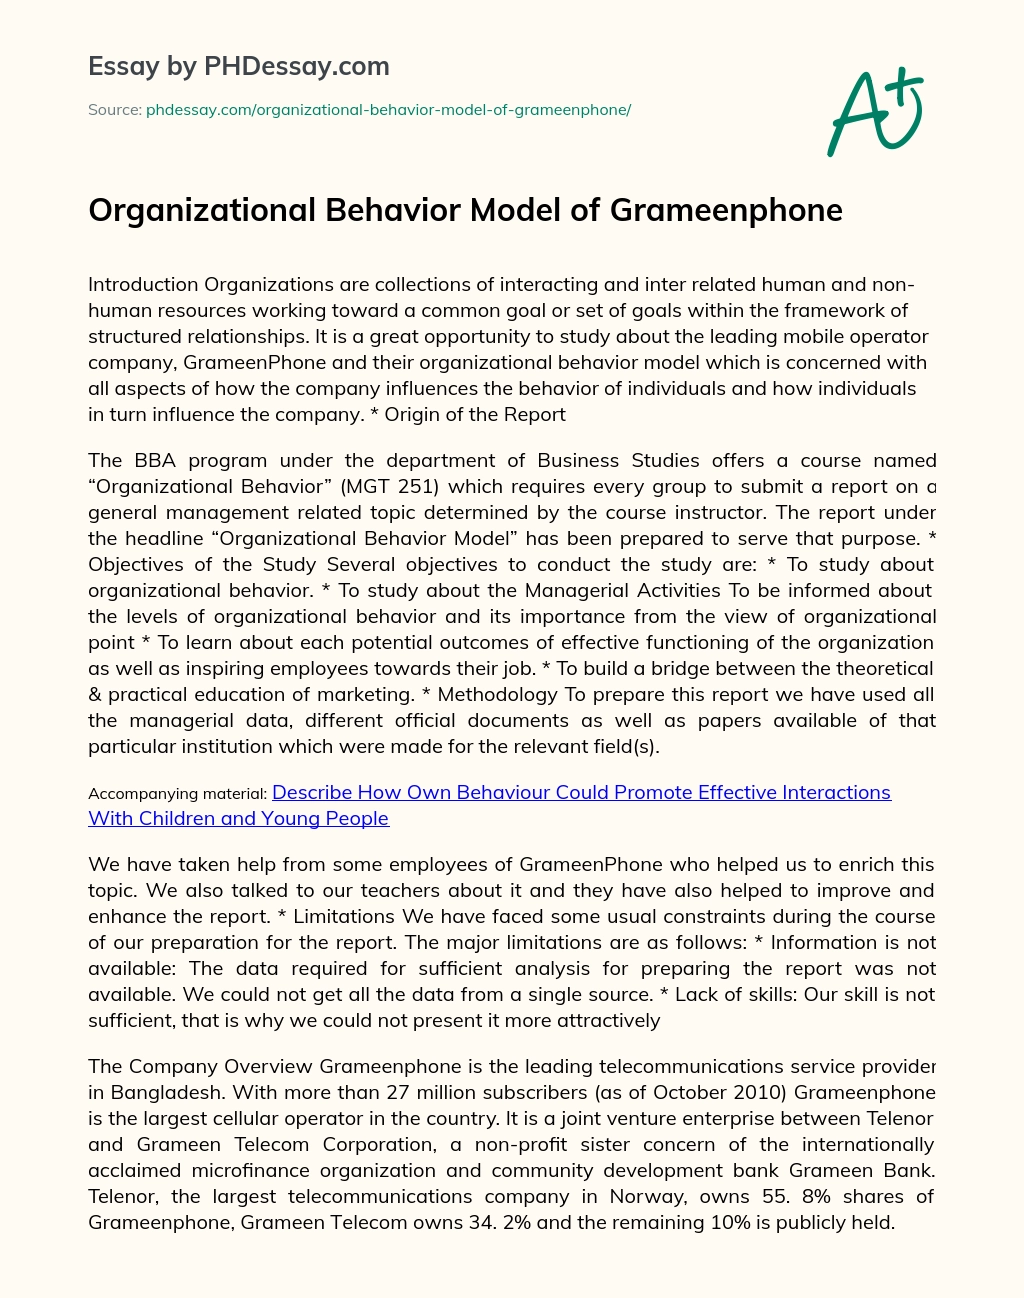 Organizational Behavior Model of Grameenphone essay